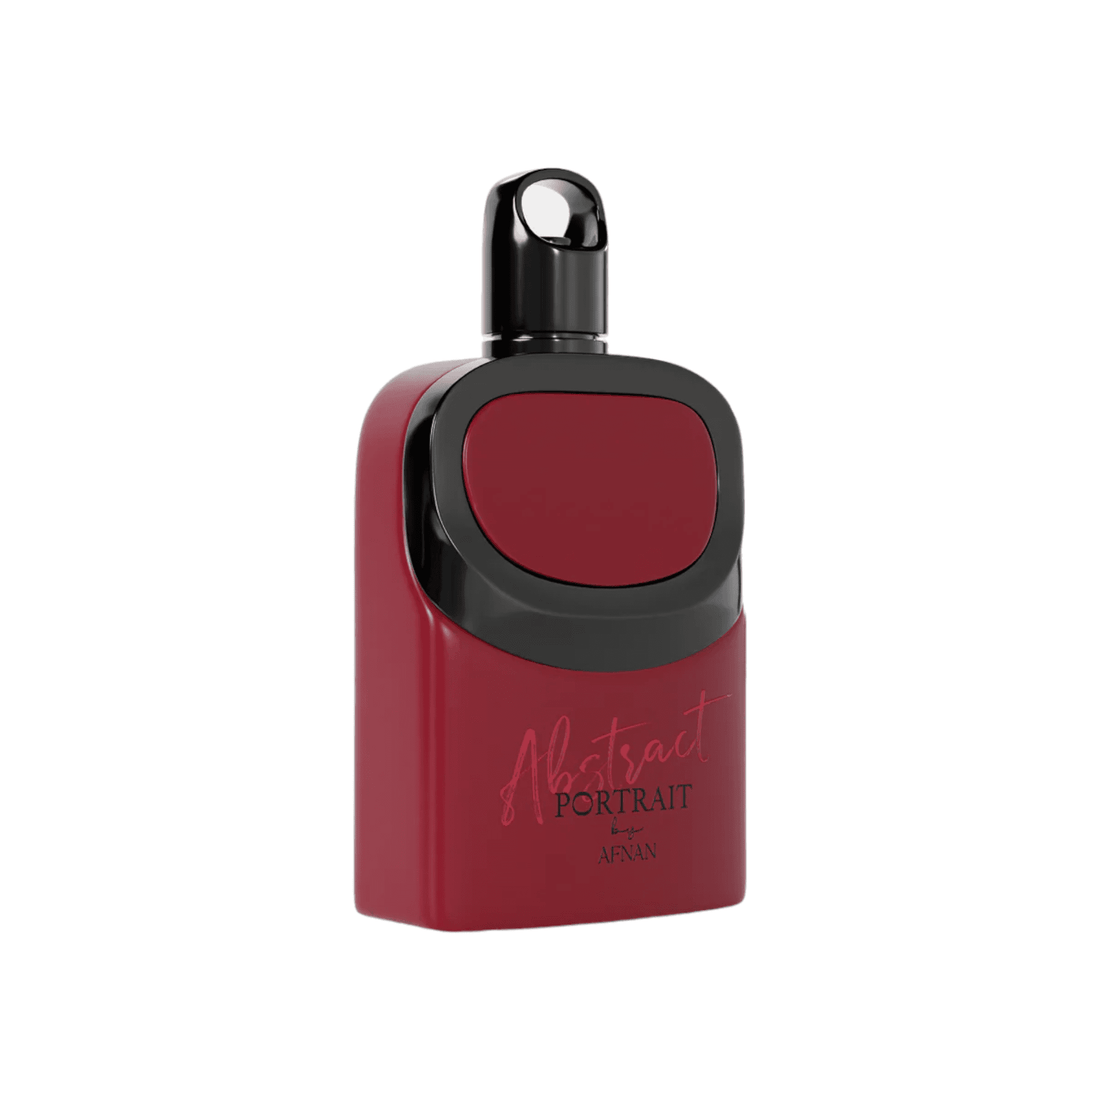 Elegant 100ml bottle of Afnan Abstract Portrait Eau De Parfum, showcasing its sophisticated and timeless fragrance.